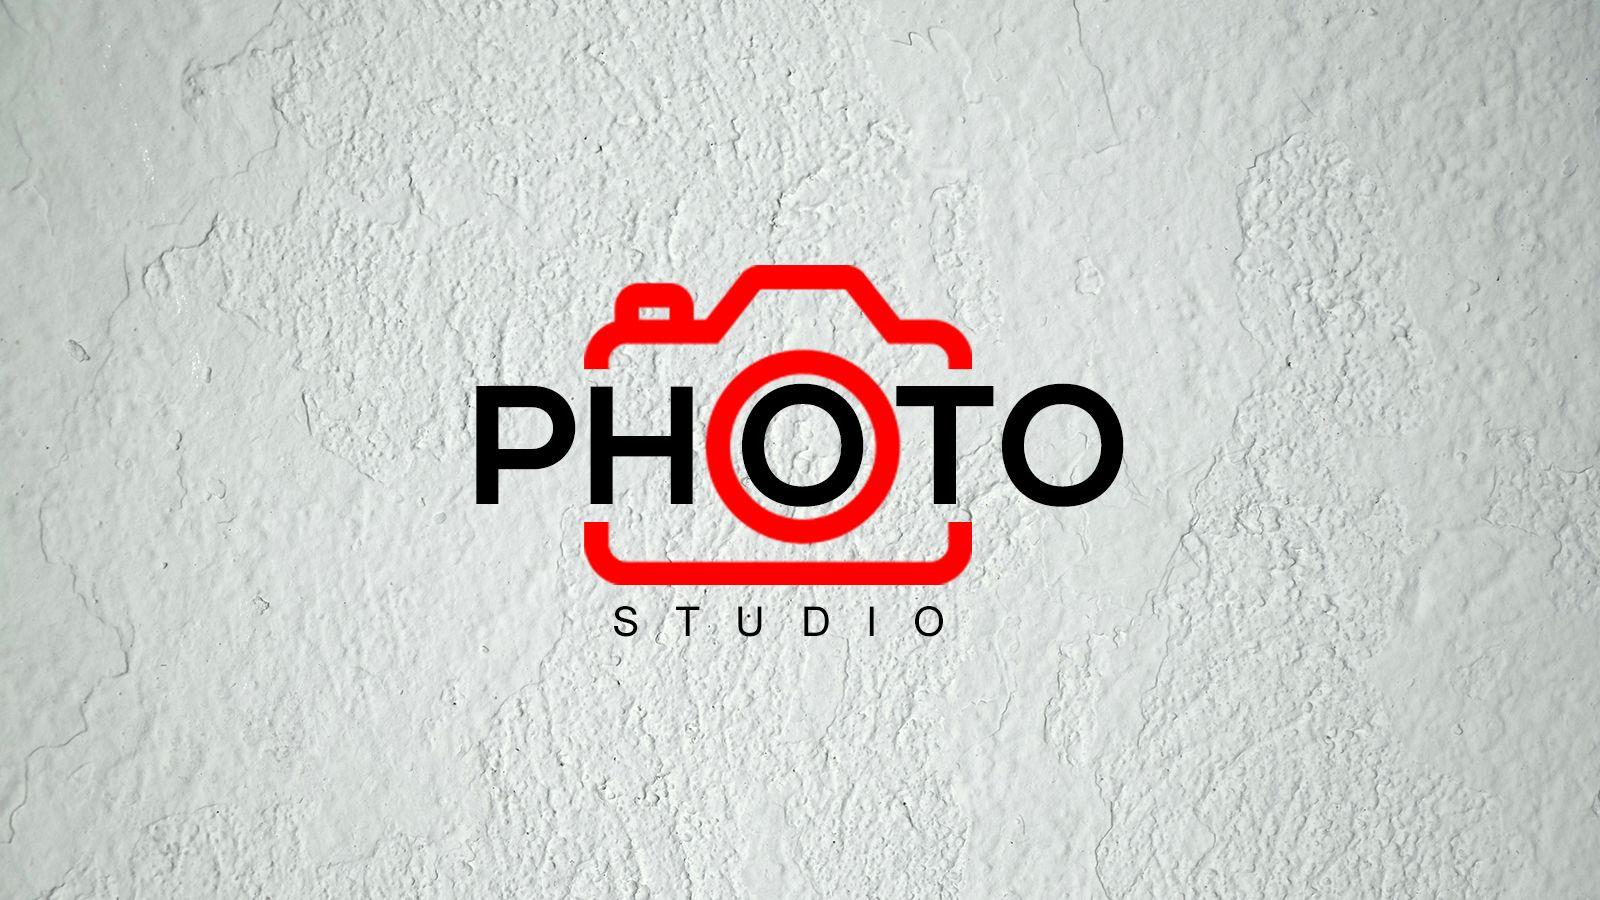 Potography Logo - How to Easily Design A Photography Logo - Photoshop Tutorial ...